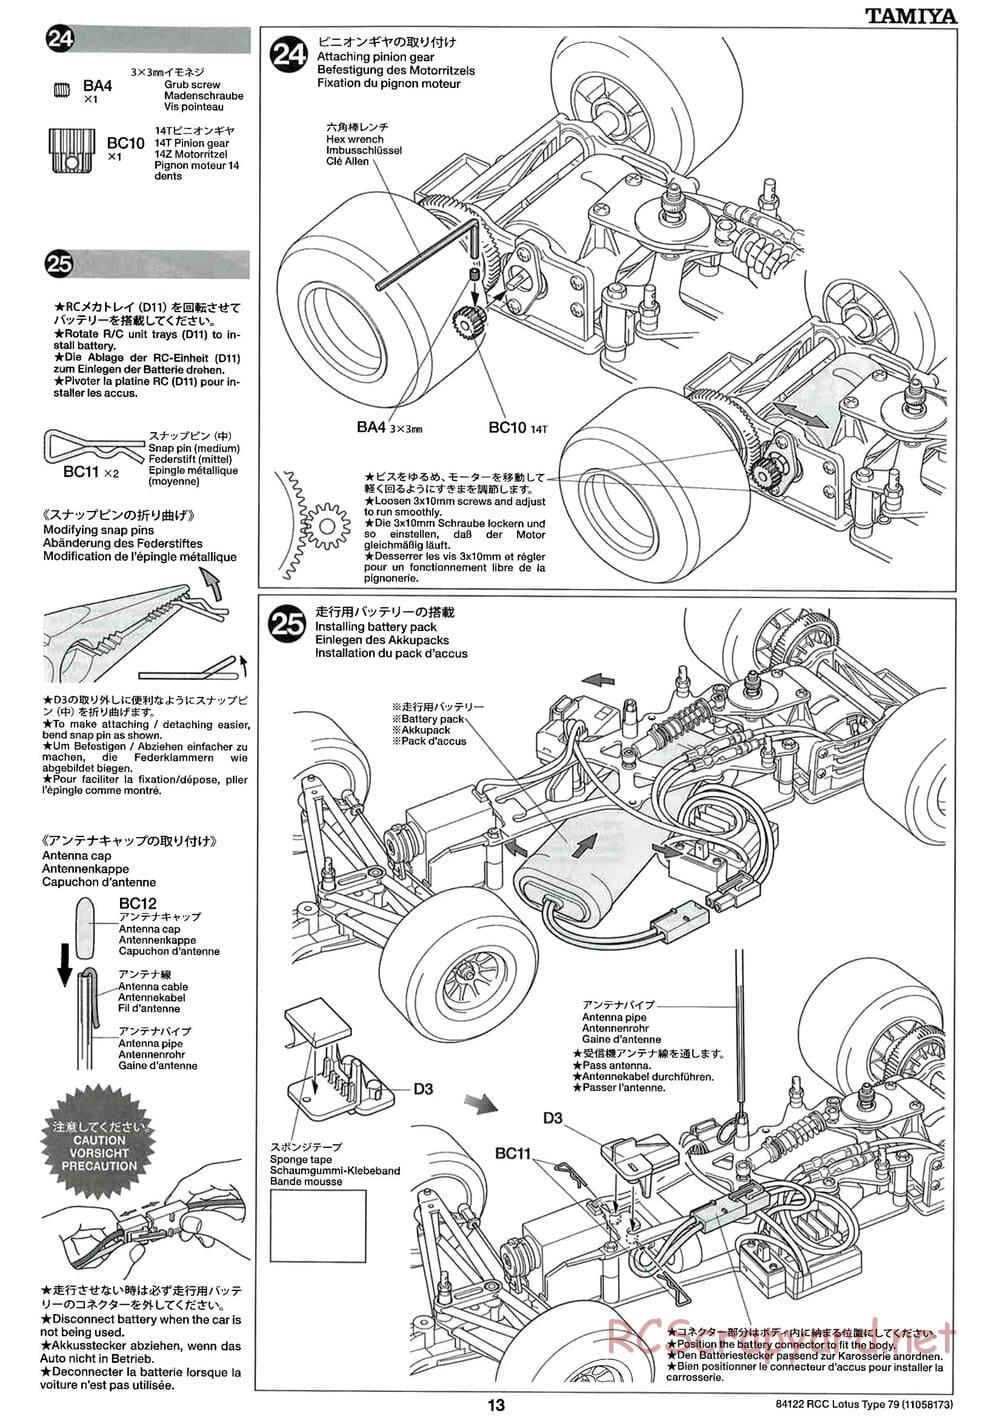 Tamiya - Lotus Type 79 - F104W Chassis - Manual - Page 13